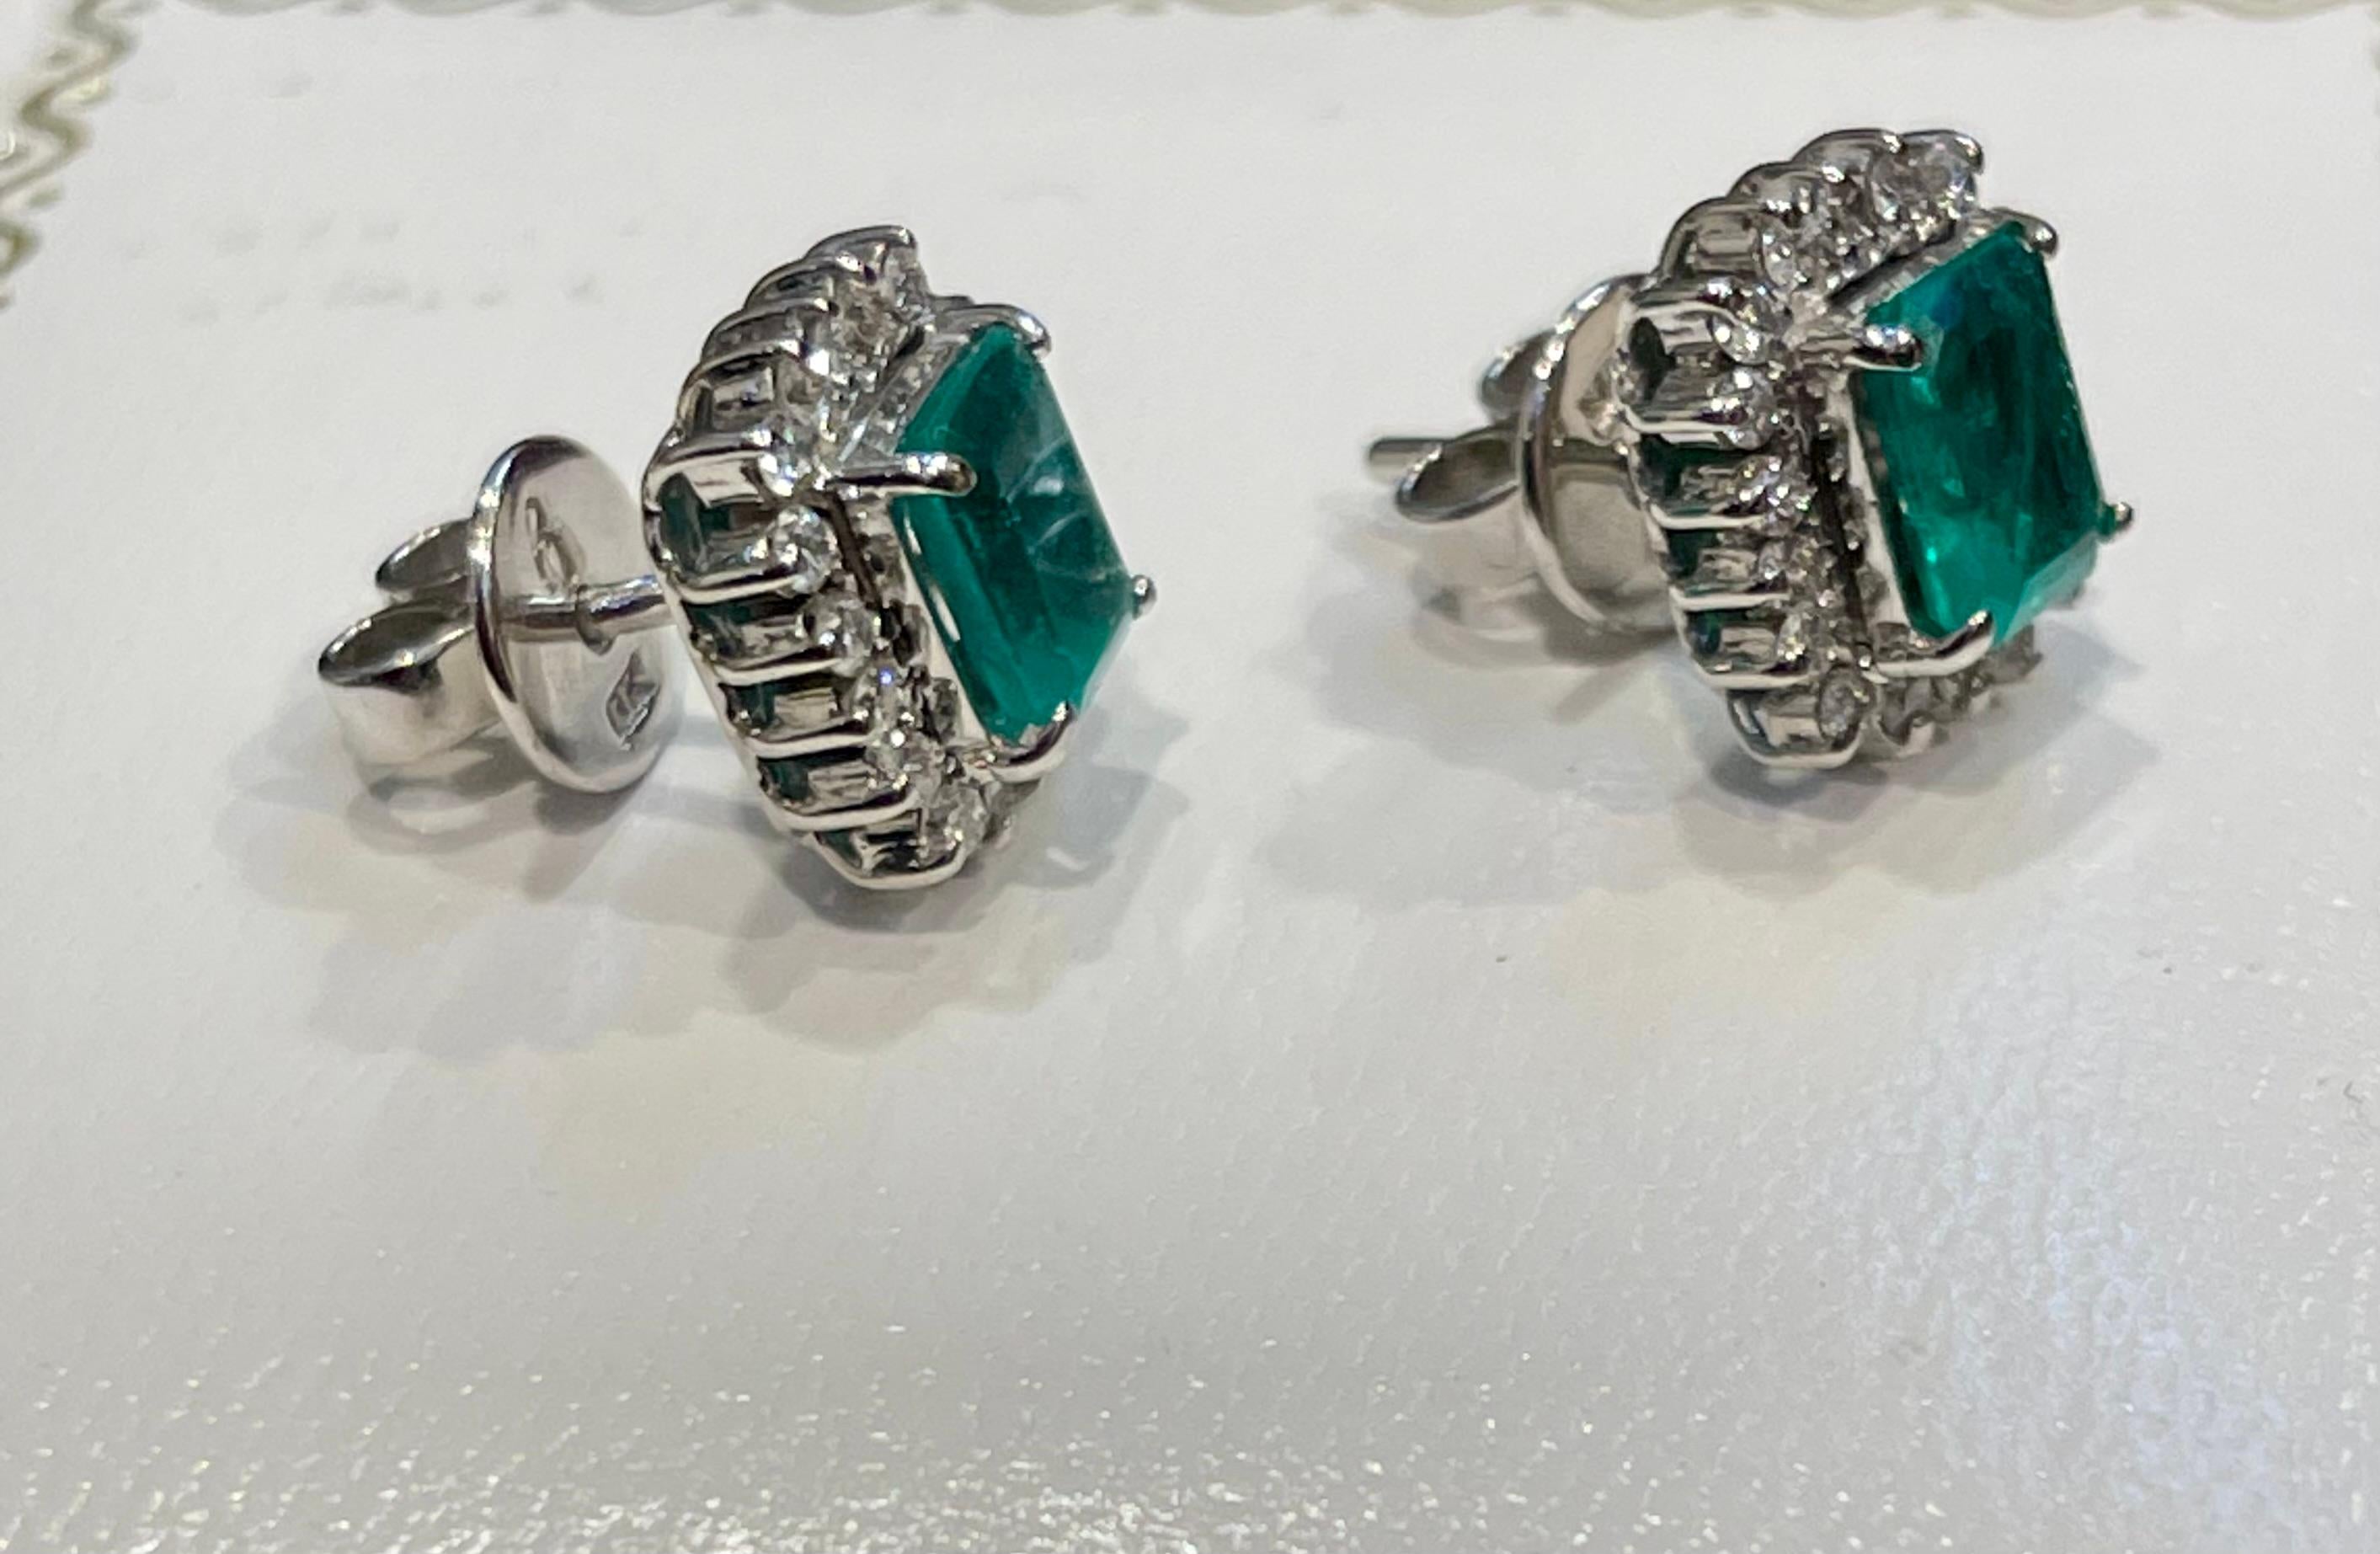 2. 25 Ct Colombian Emerald Cut Emerald & Diamond Earrings 18 Karat White Gold 10